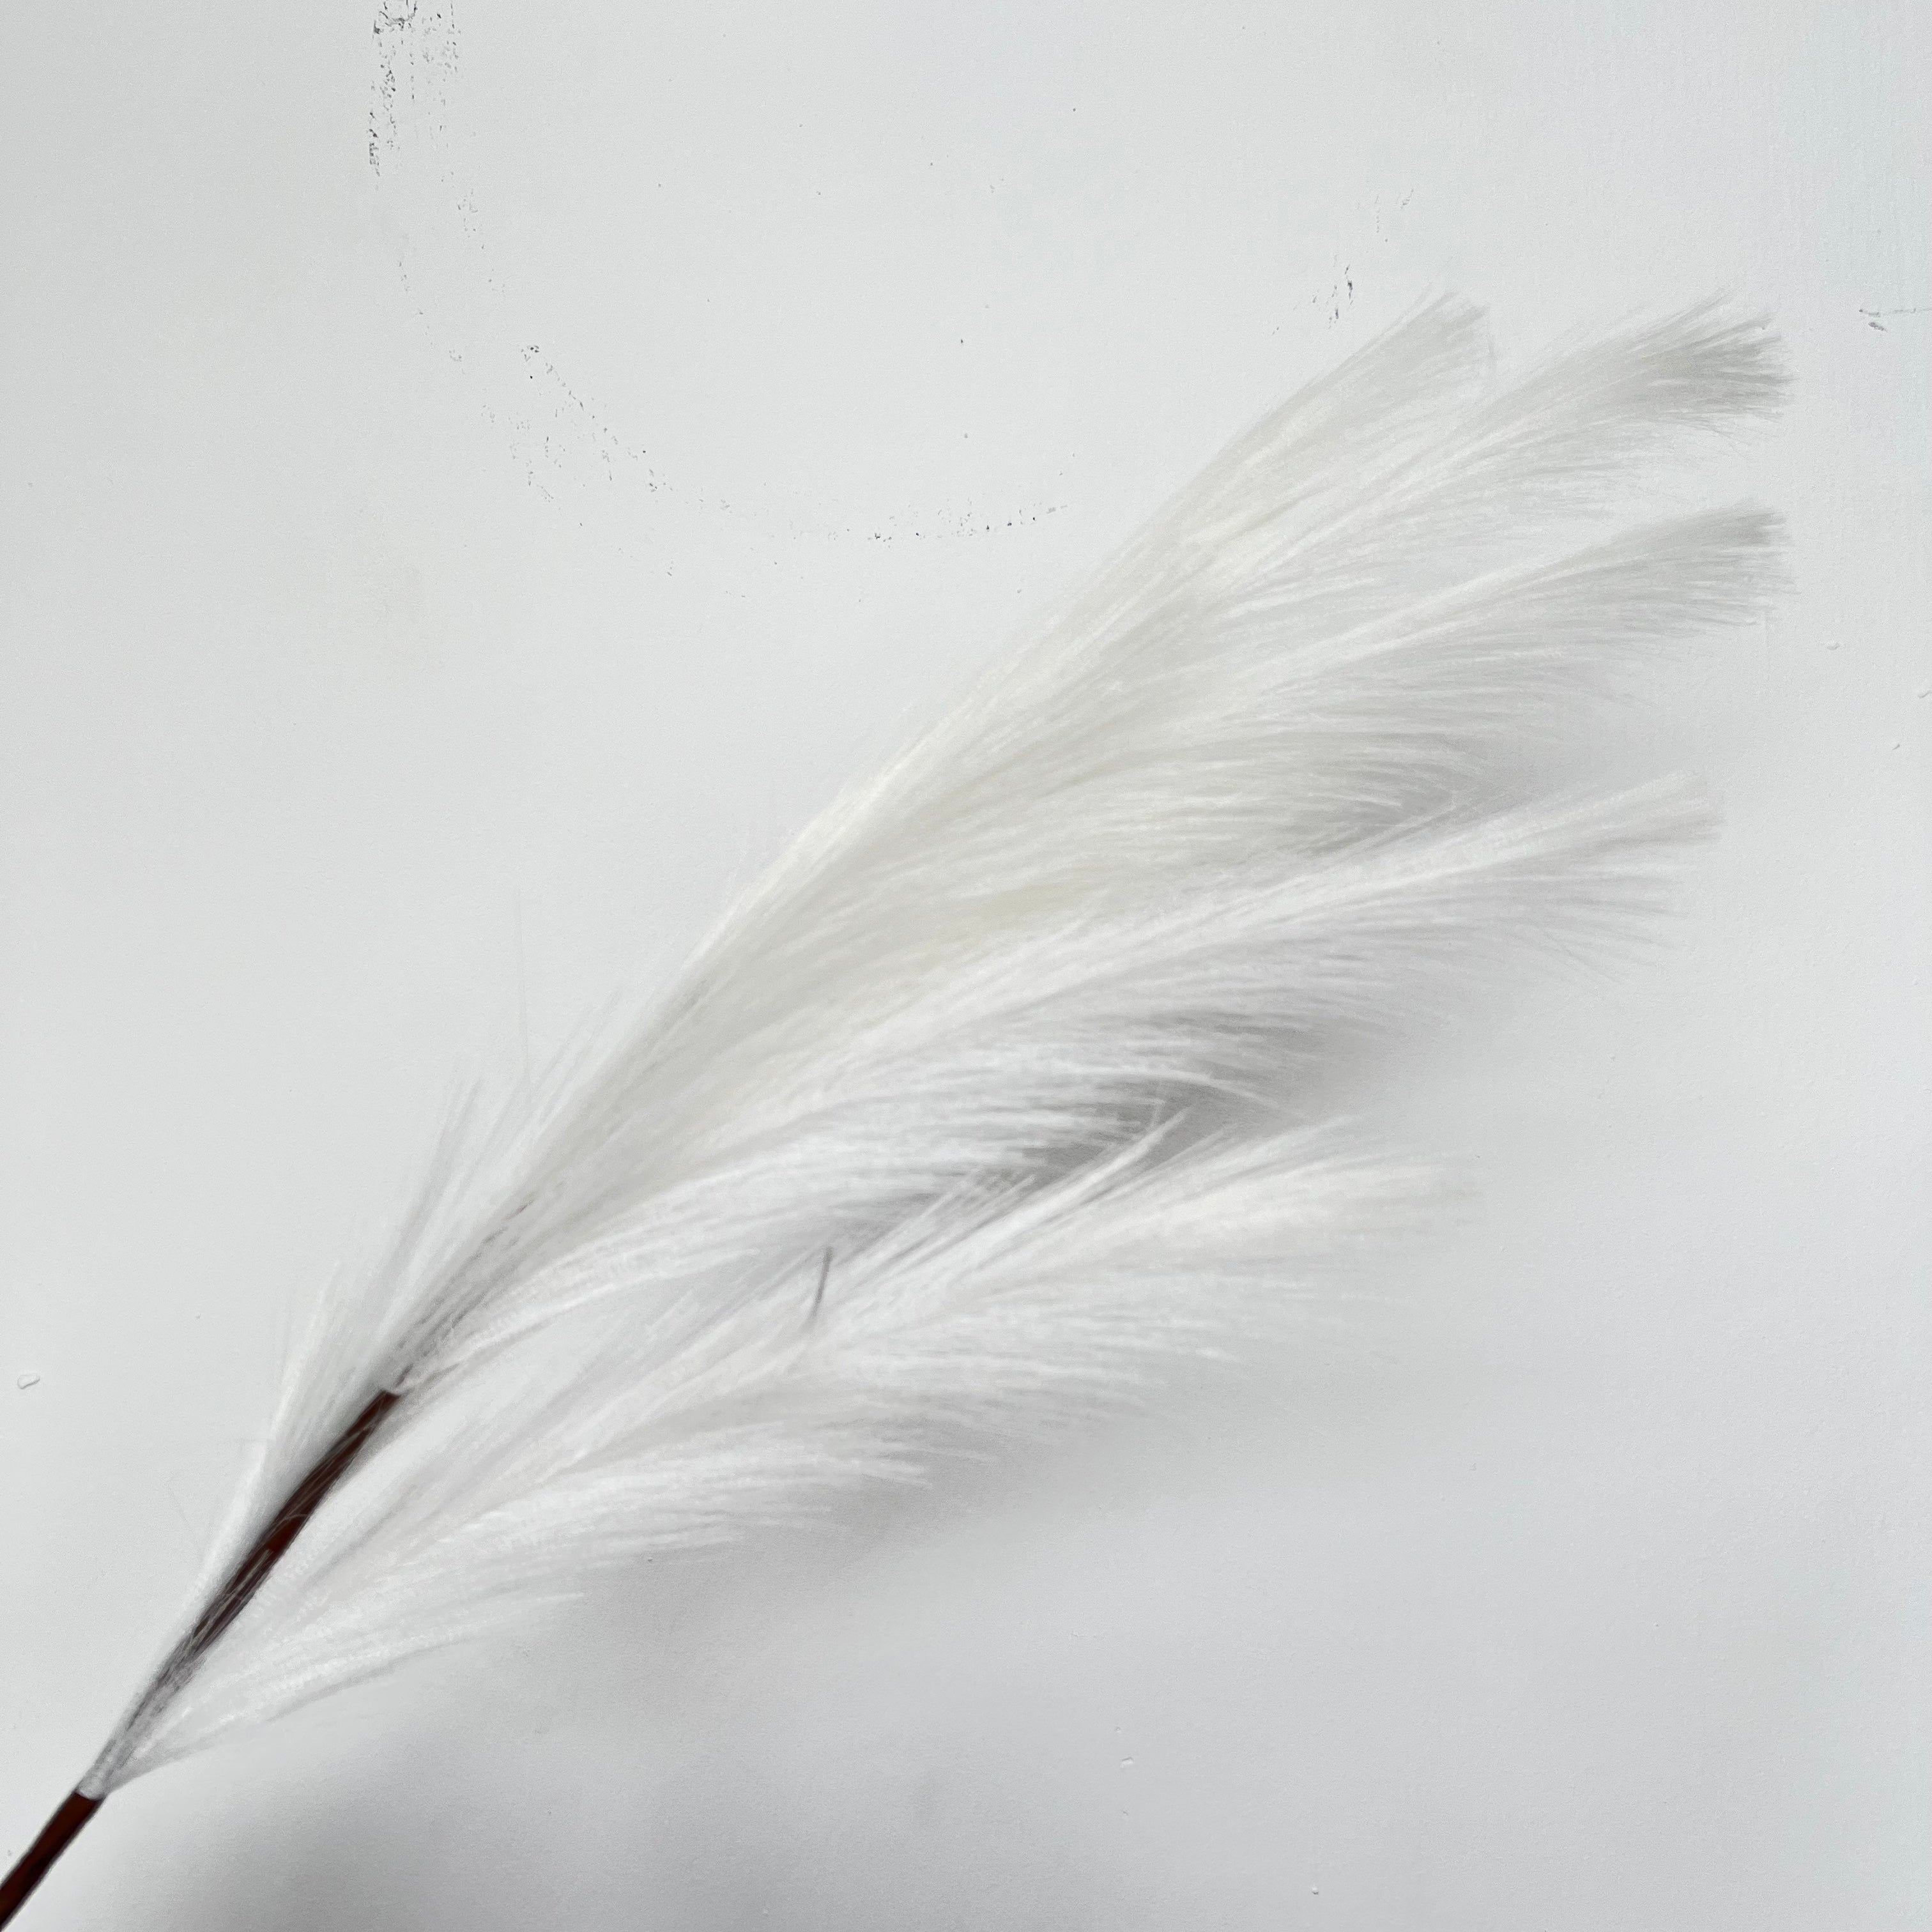 Common Reed (2 pcs)